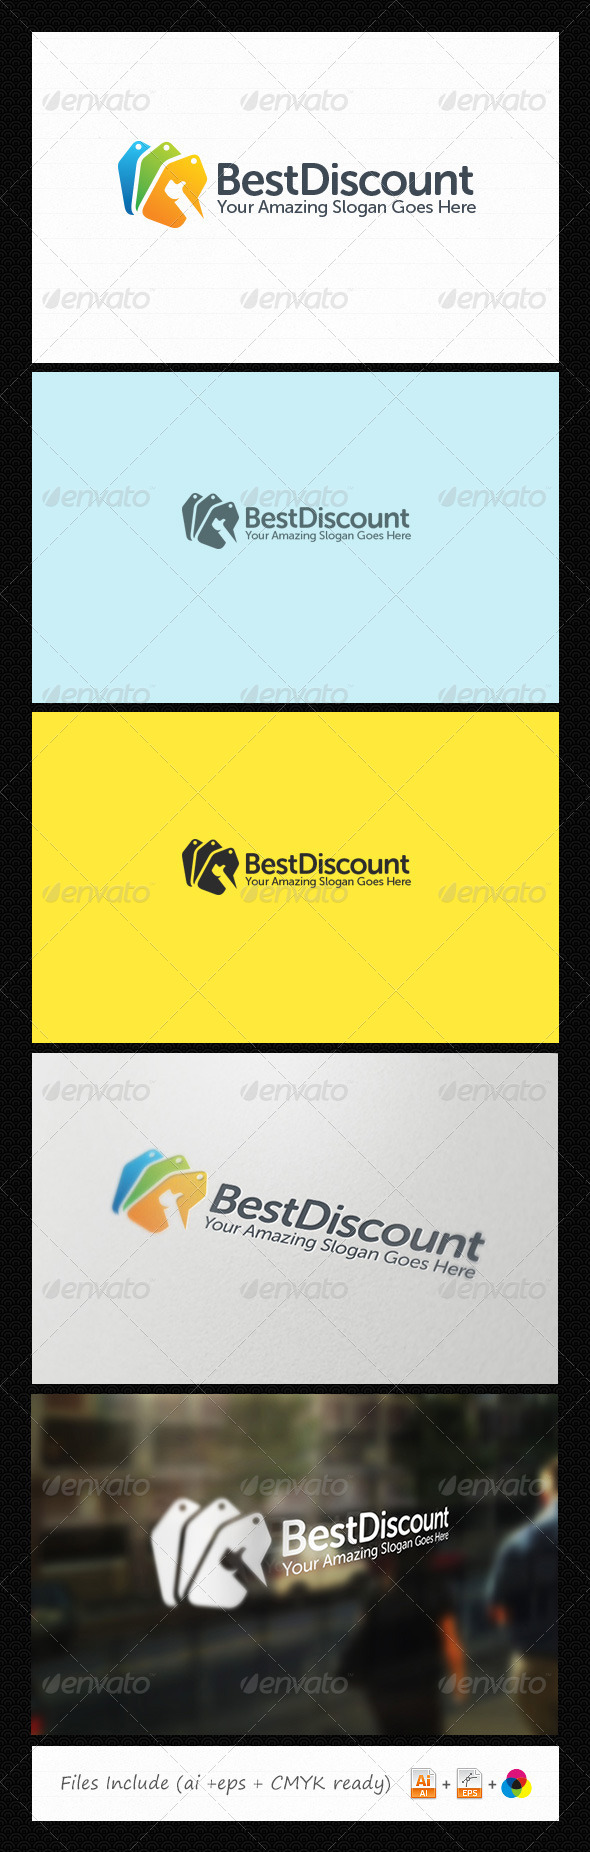 Best Discount Logo